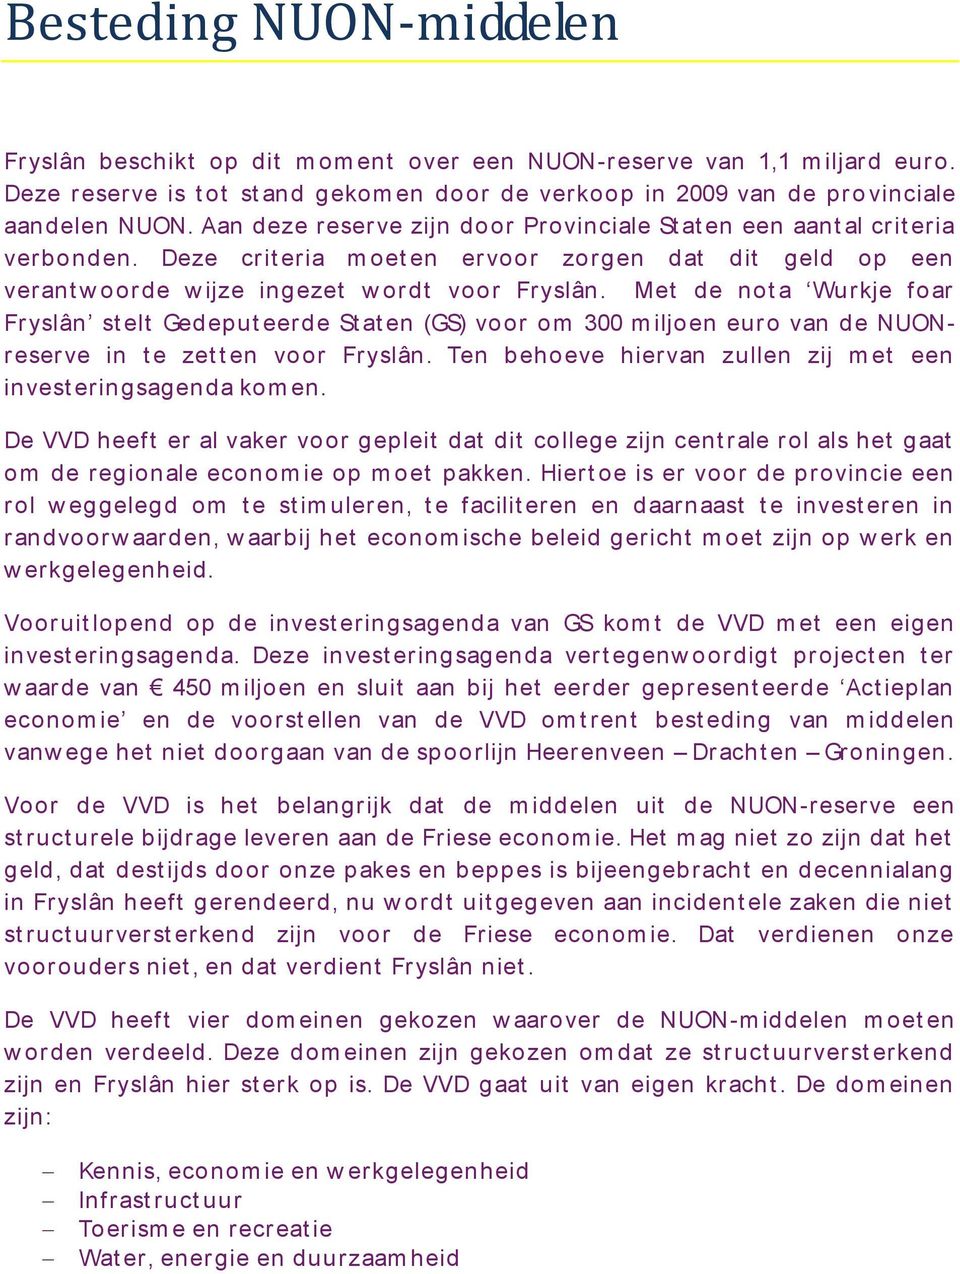 Met de not a Wurkje foar Fryslân st elt Gedeput eerde St at en (GS) voor om 300 m iljoen euro van de NUONreserve in t e zet t en voor Fryslân.